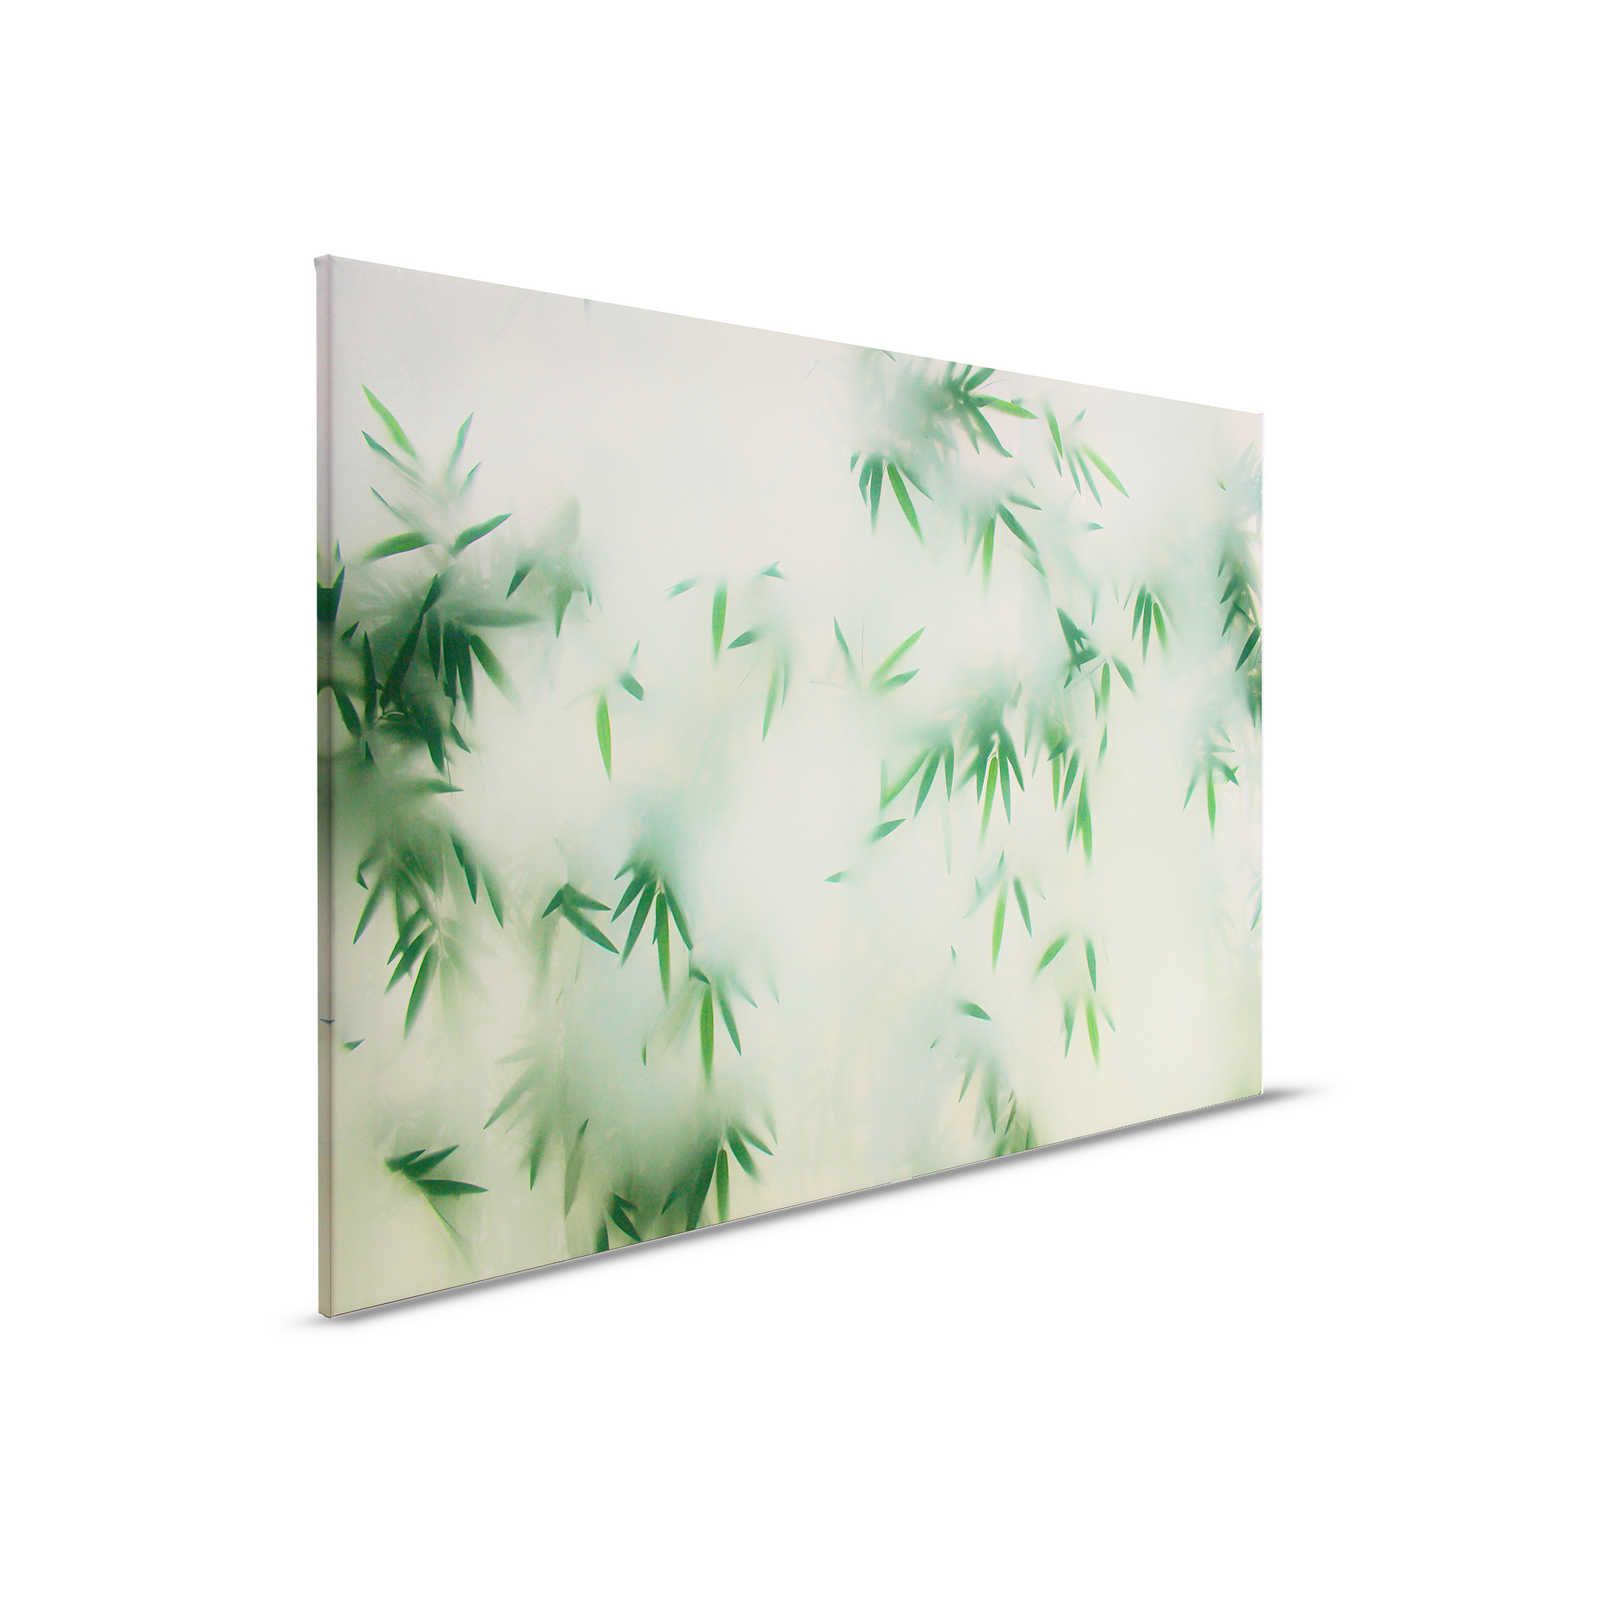         Panda Paradise 2 - Leinwandbild grüner Bambus im Nebel – 0,90 m x 0,60 m
    